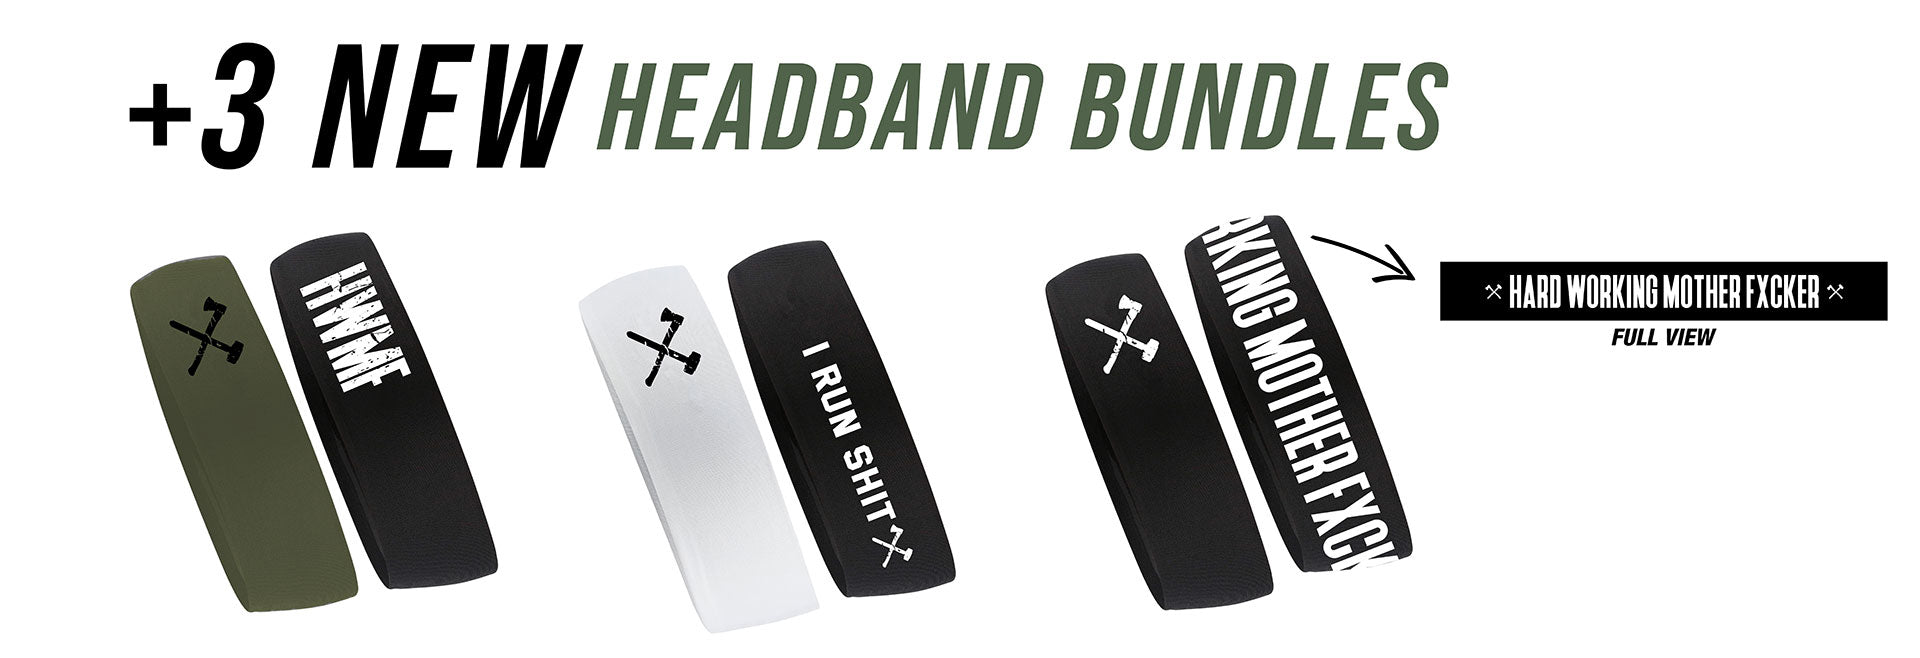 headband bundles